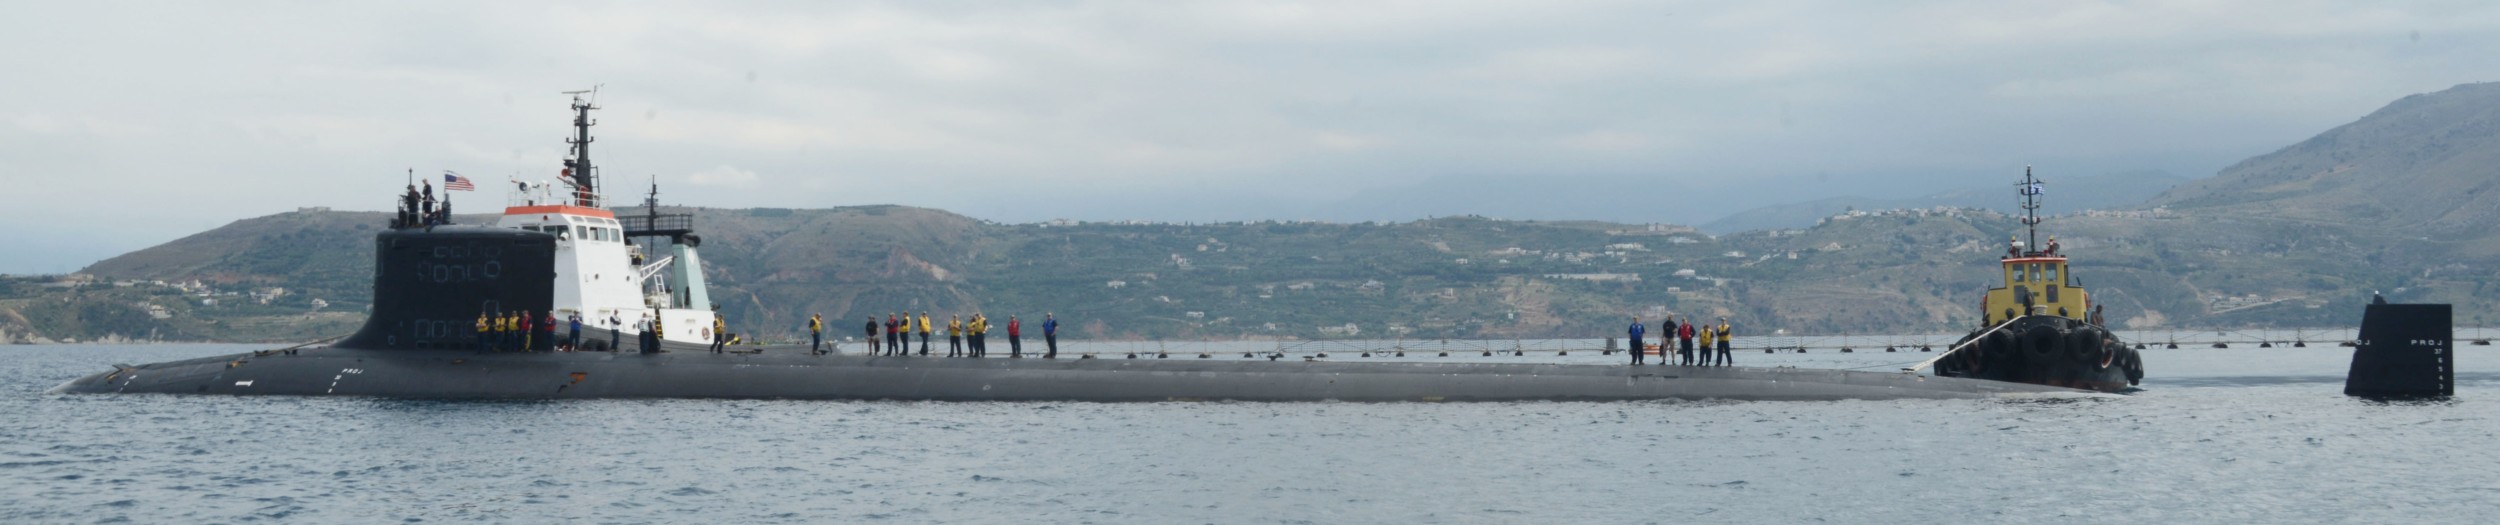 ssn-779 uss new mexico virginia class attack submarine us navy 50